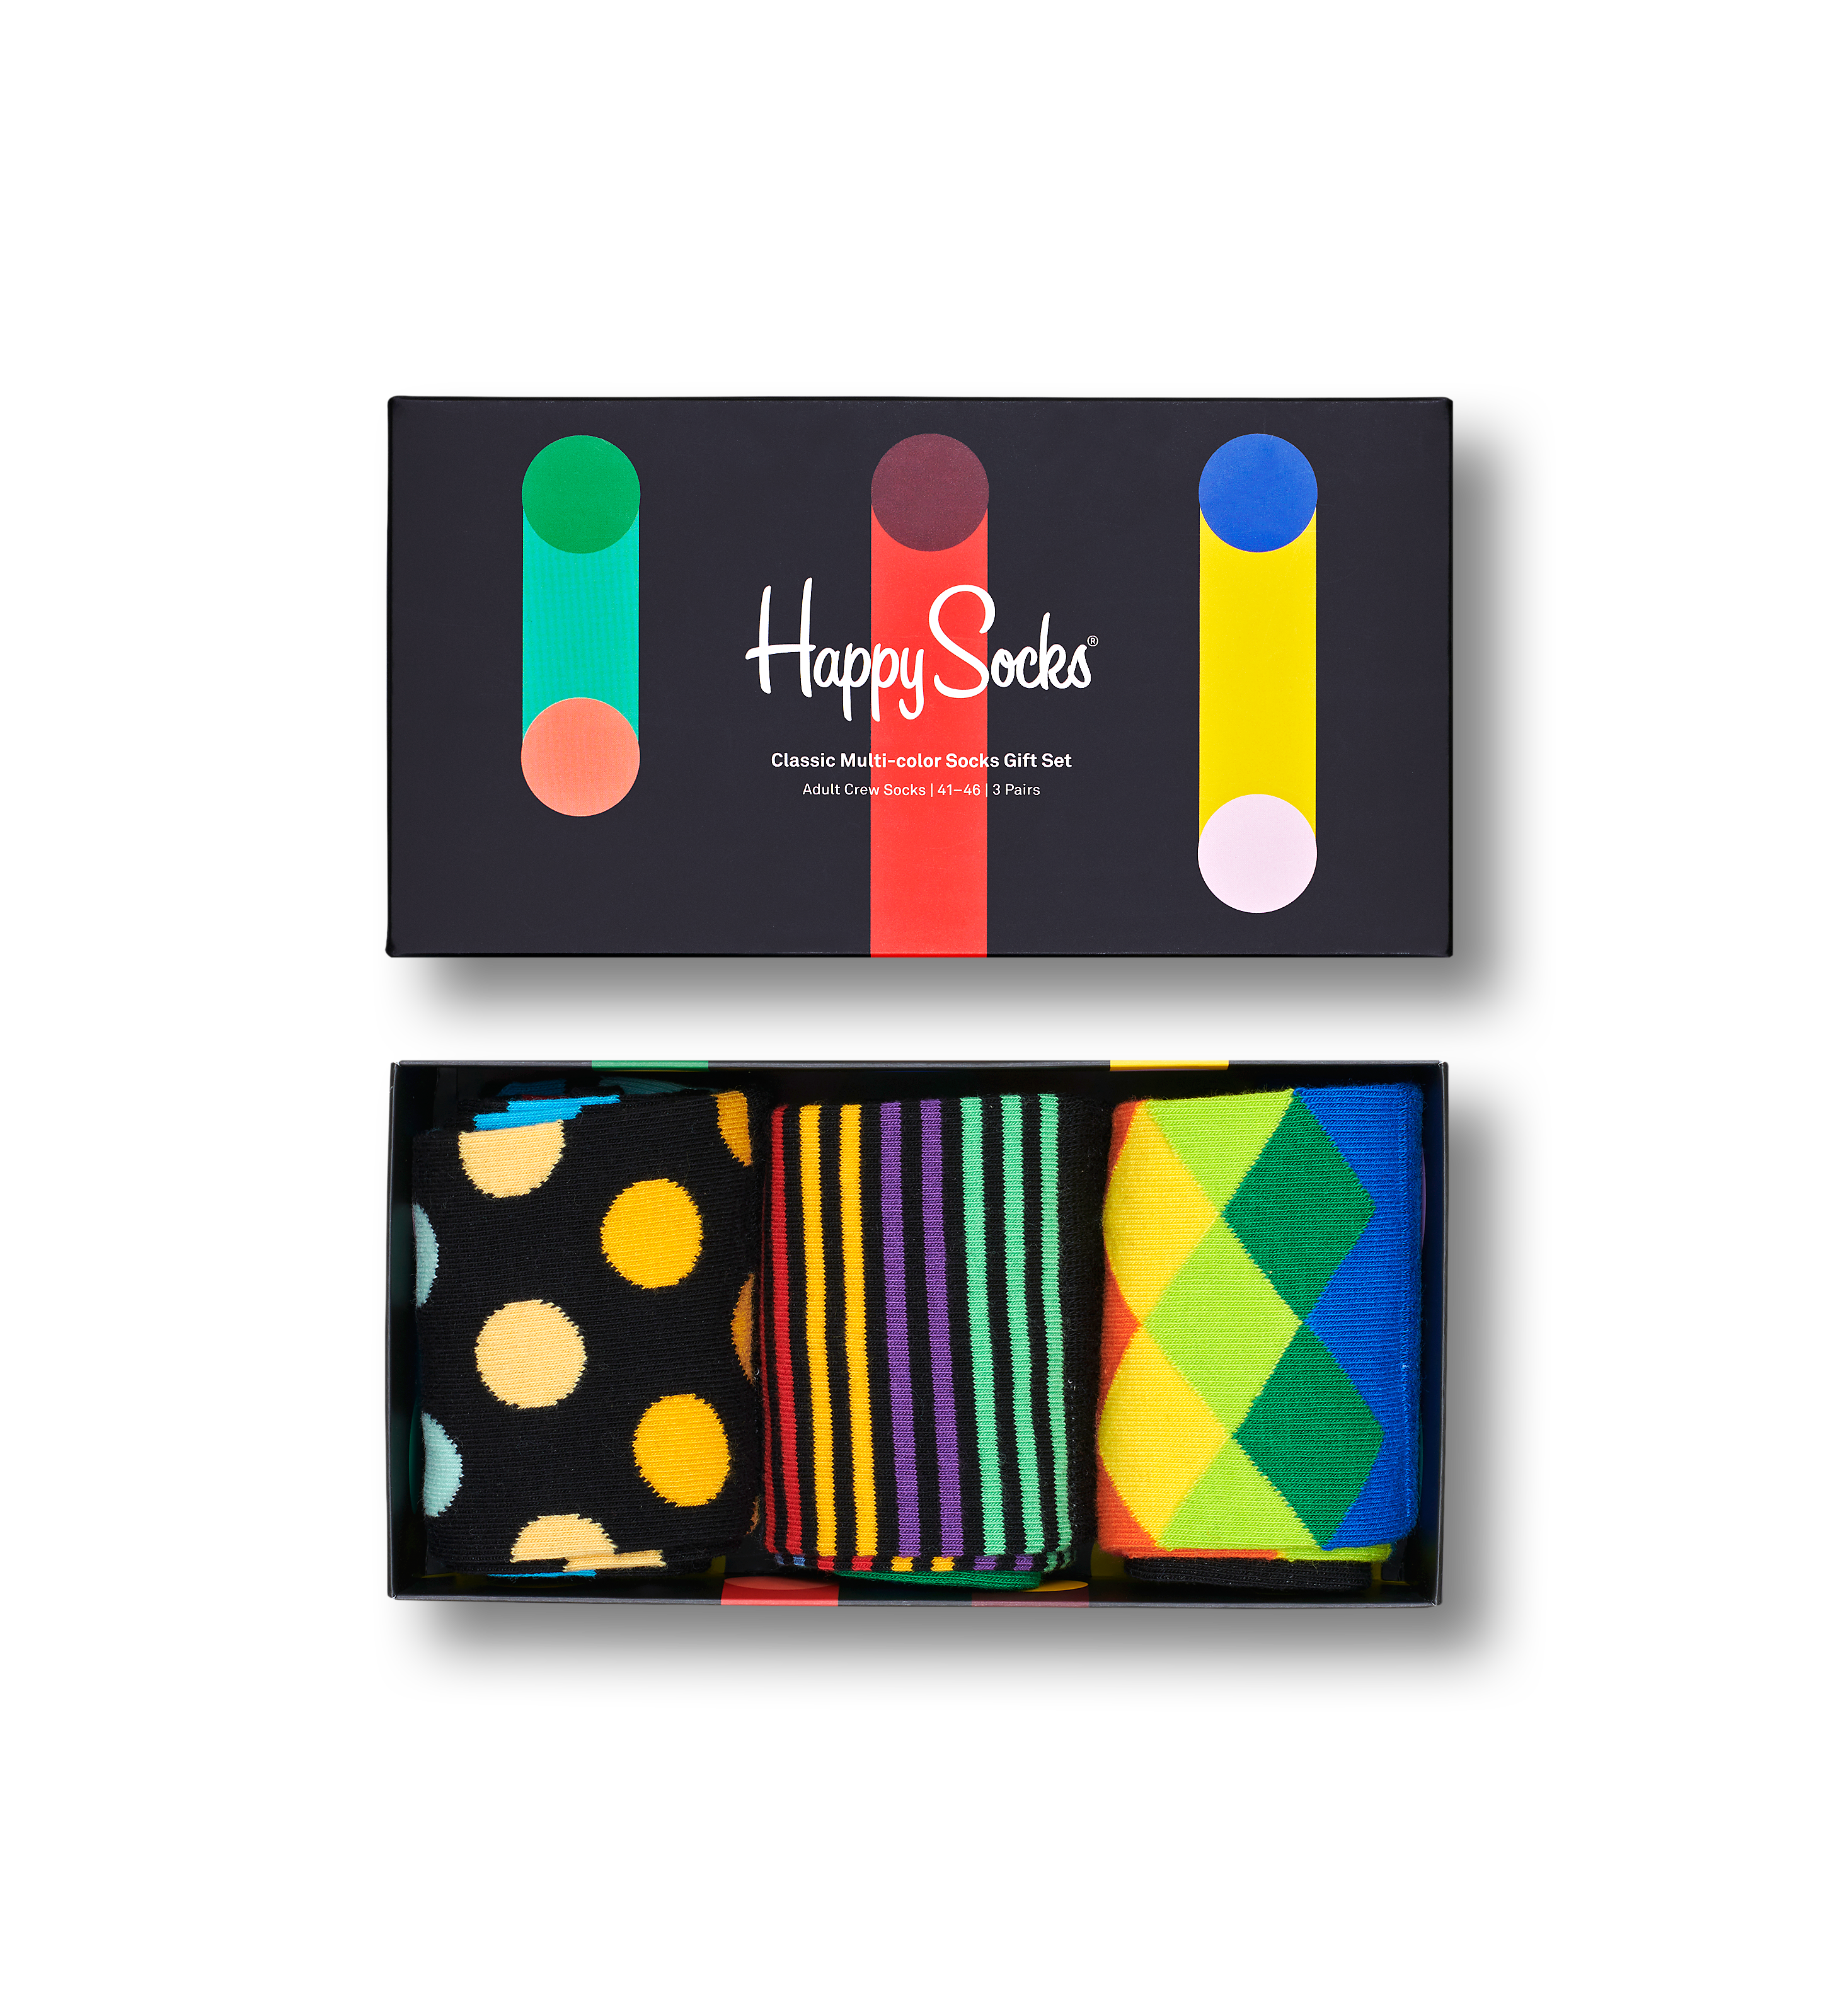 Classic Multi-color Socks Gift Set 3pc | Happy Socks